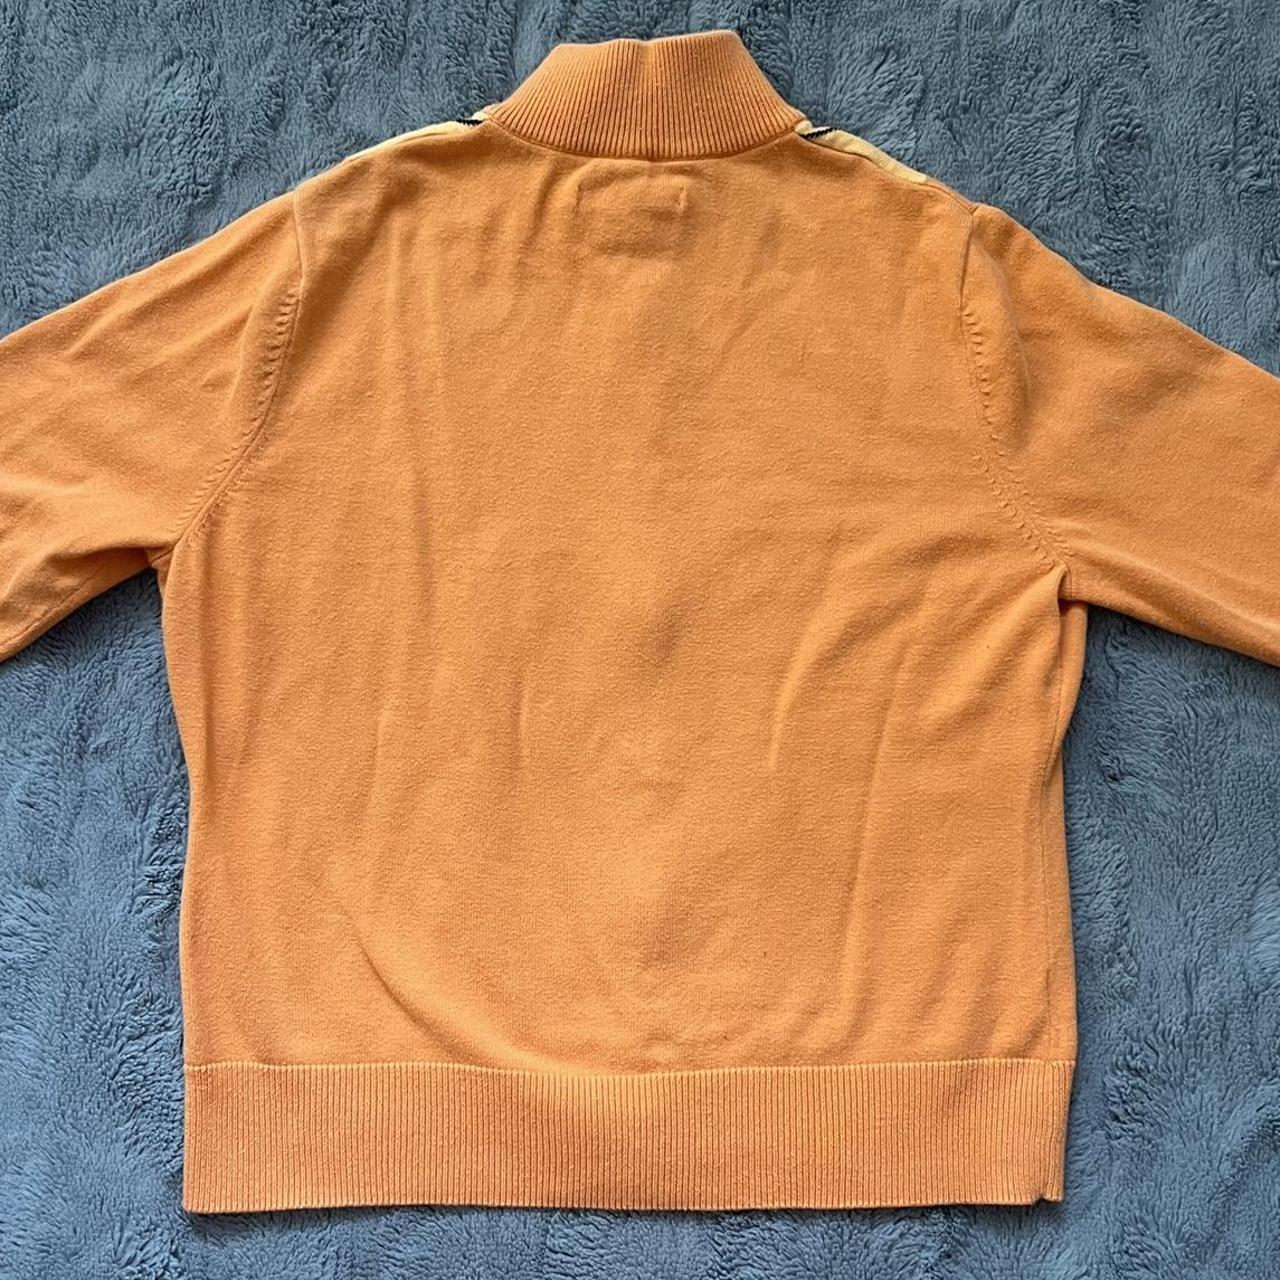 Orange Argyle Sweater Grand Slam FREE SHIPPING... - Depop